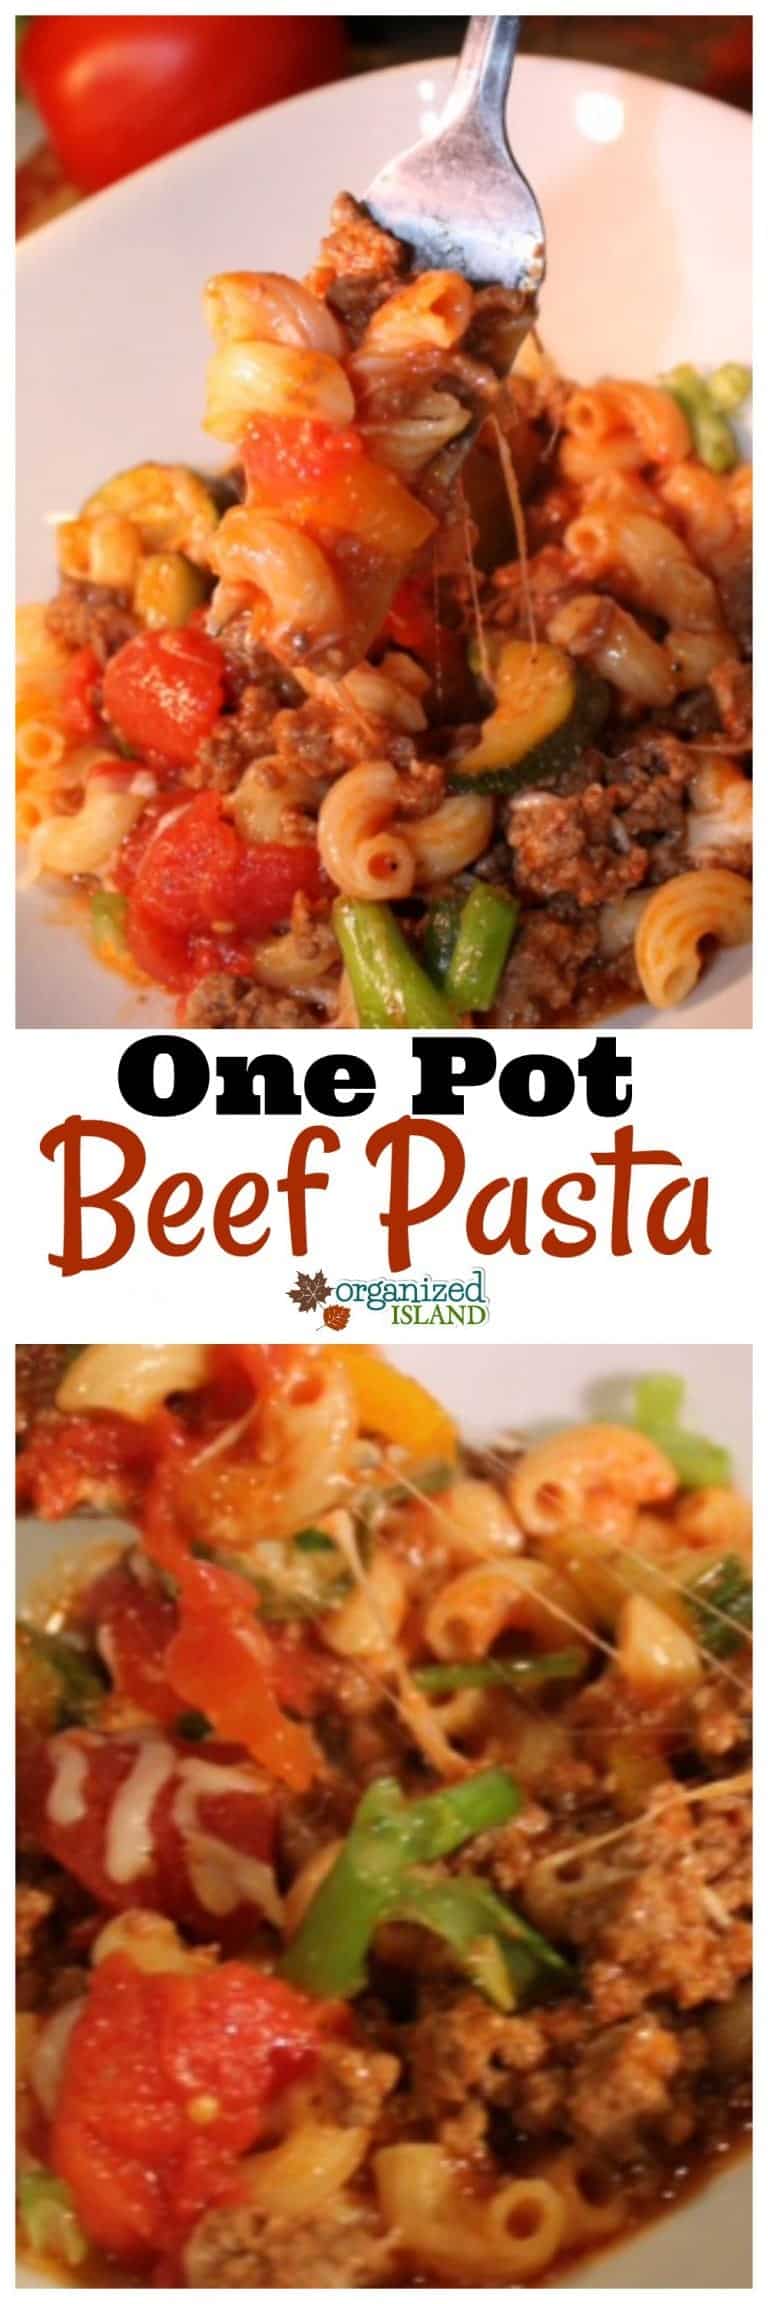 One Pot Beef Pasta - Organized Island